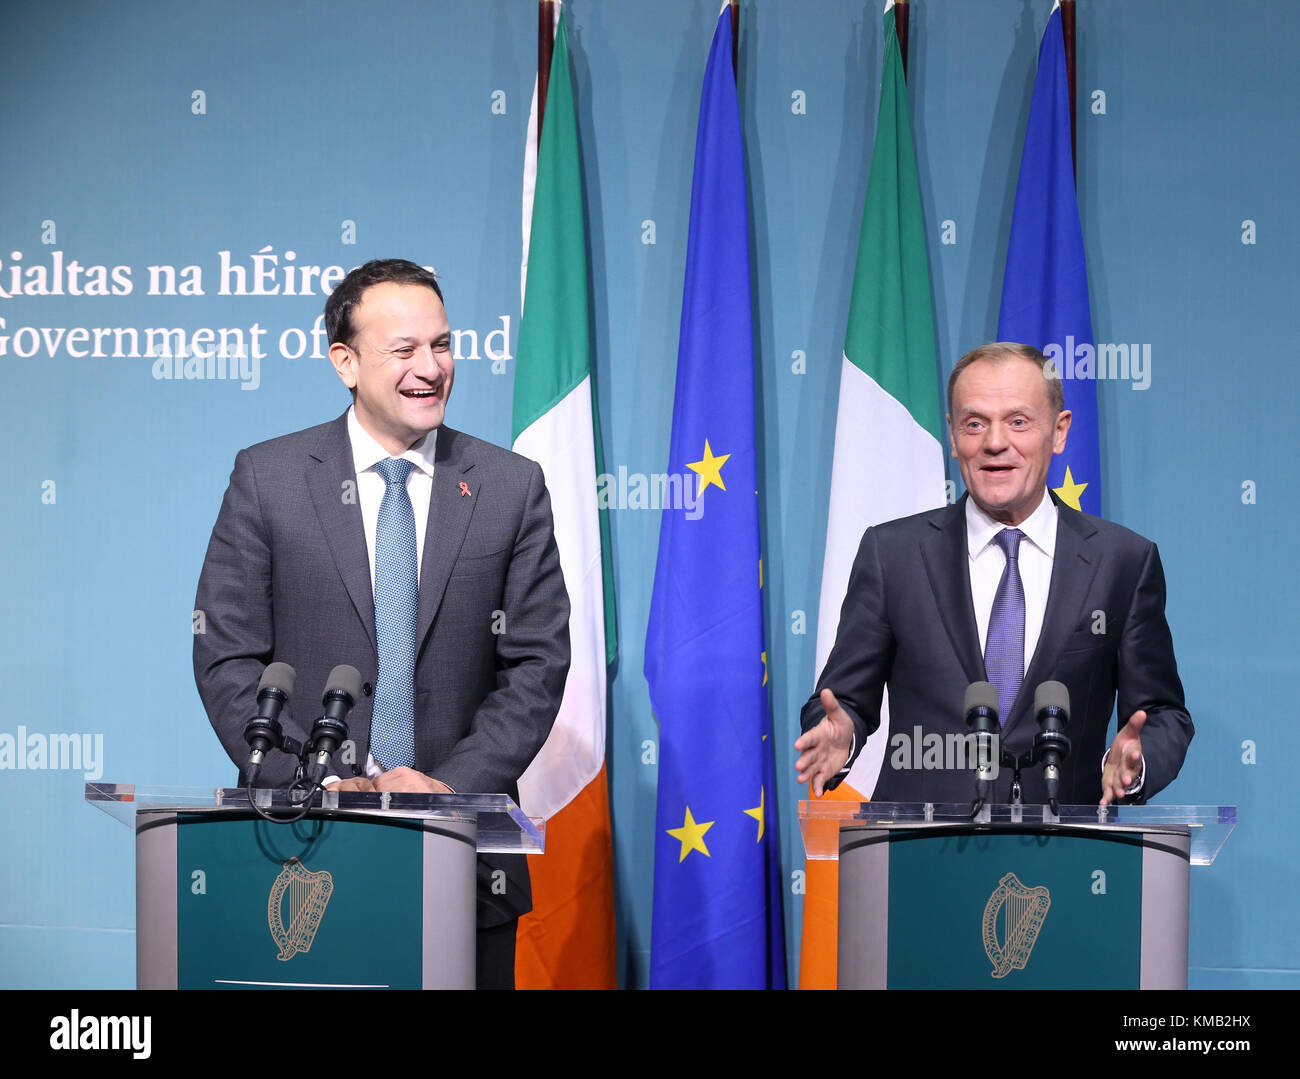 File images of Leo Varadkar, Irelands new Prime Minister (Taoiseach). Stock Photo